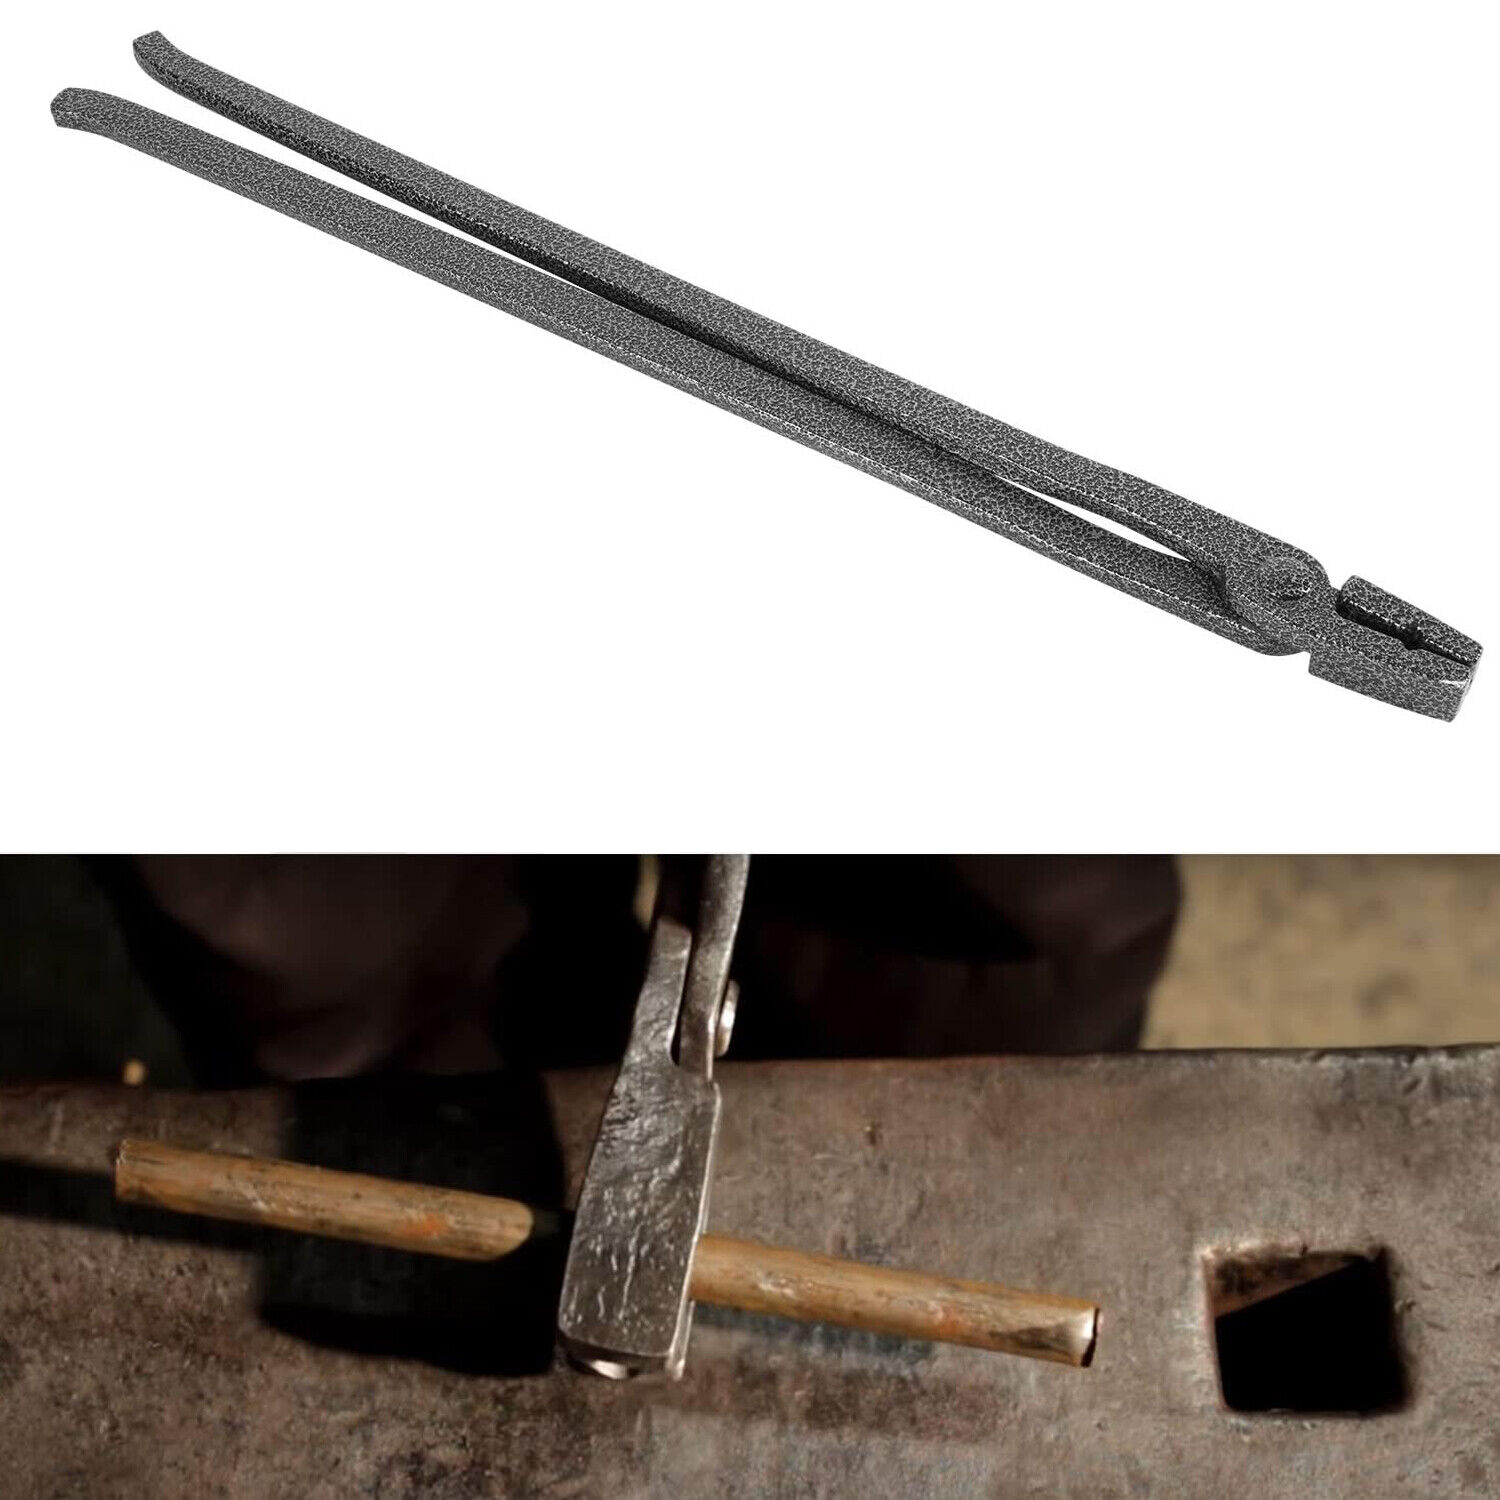 Blacksmith 1/4-inch Flat Jaw Tongs hold 1/4-inch flat bar, round bar, square bar